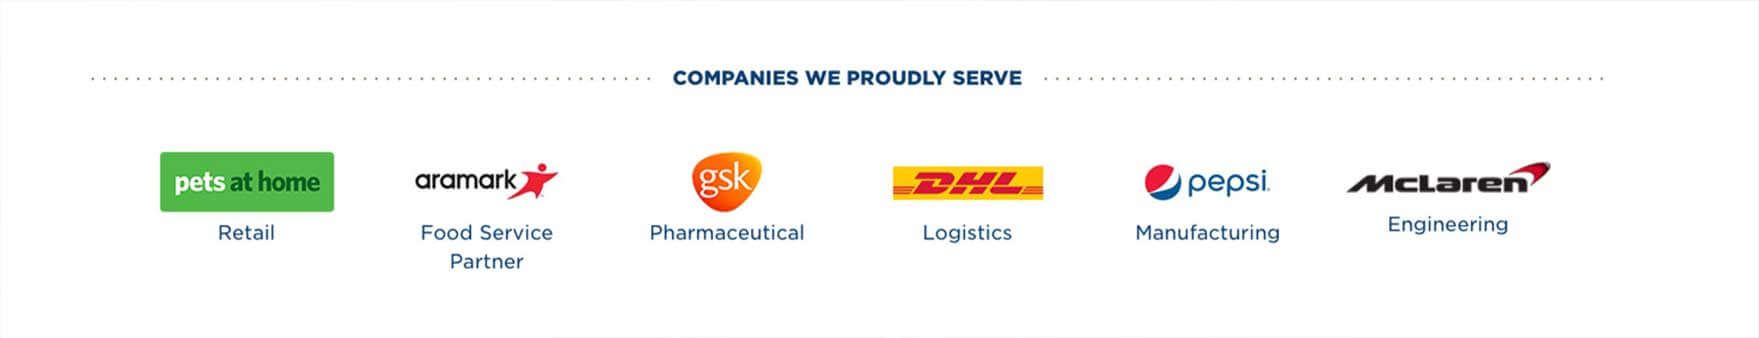 Companies we proudly serve